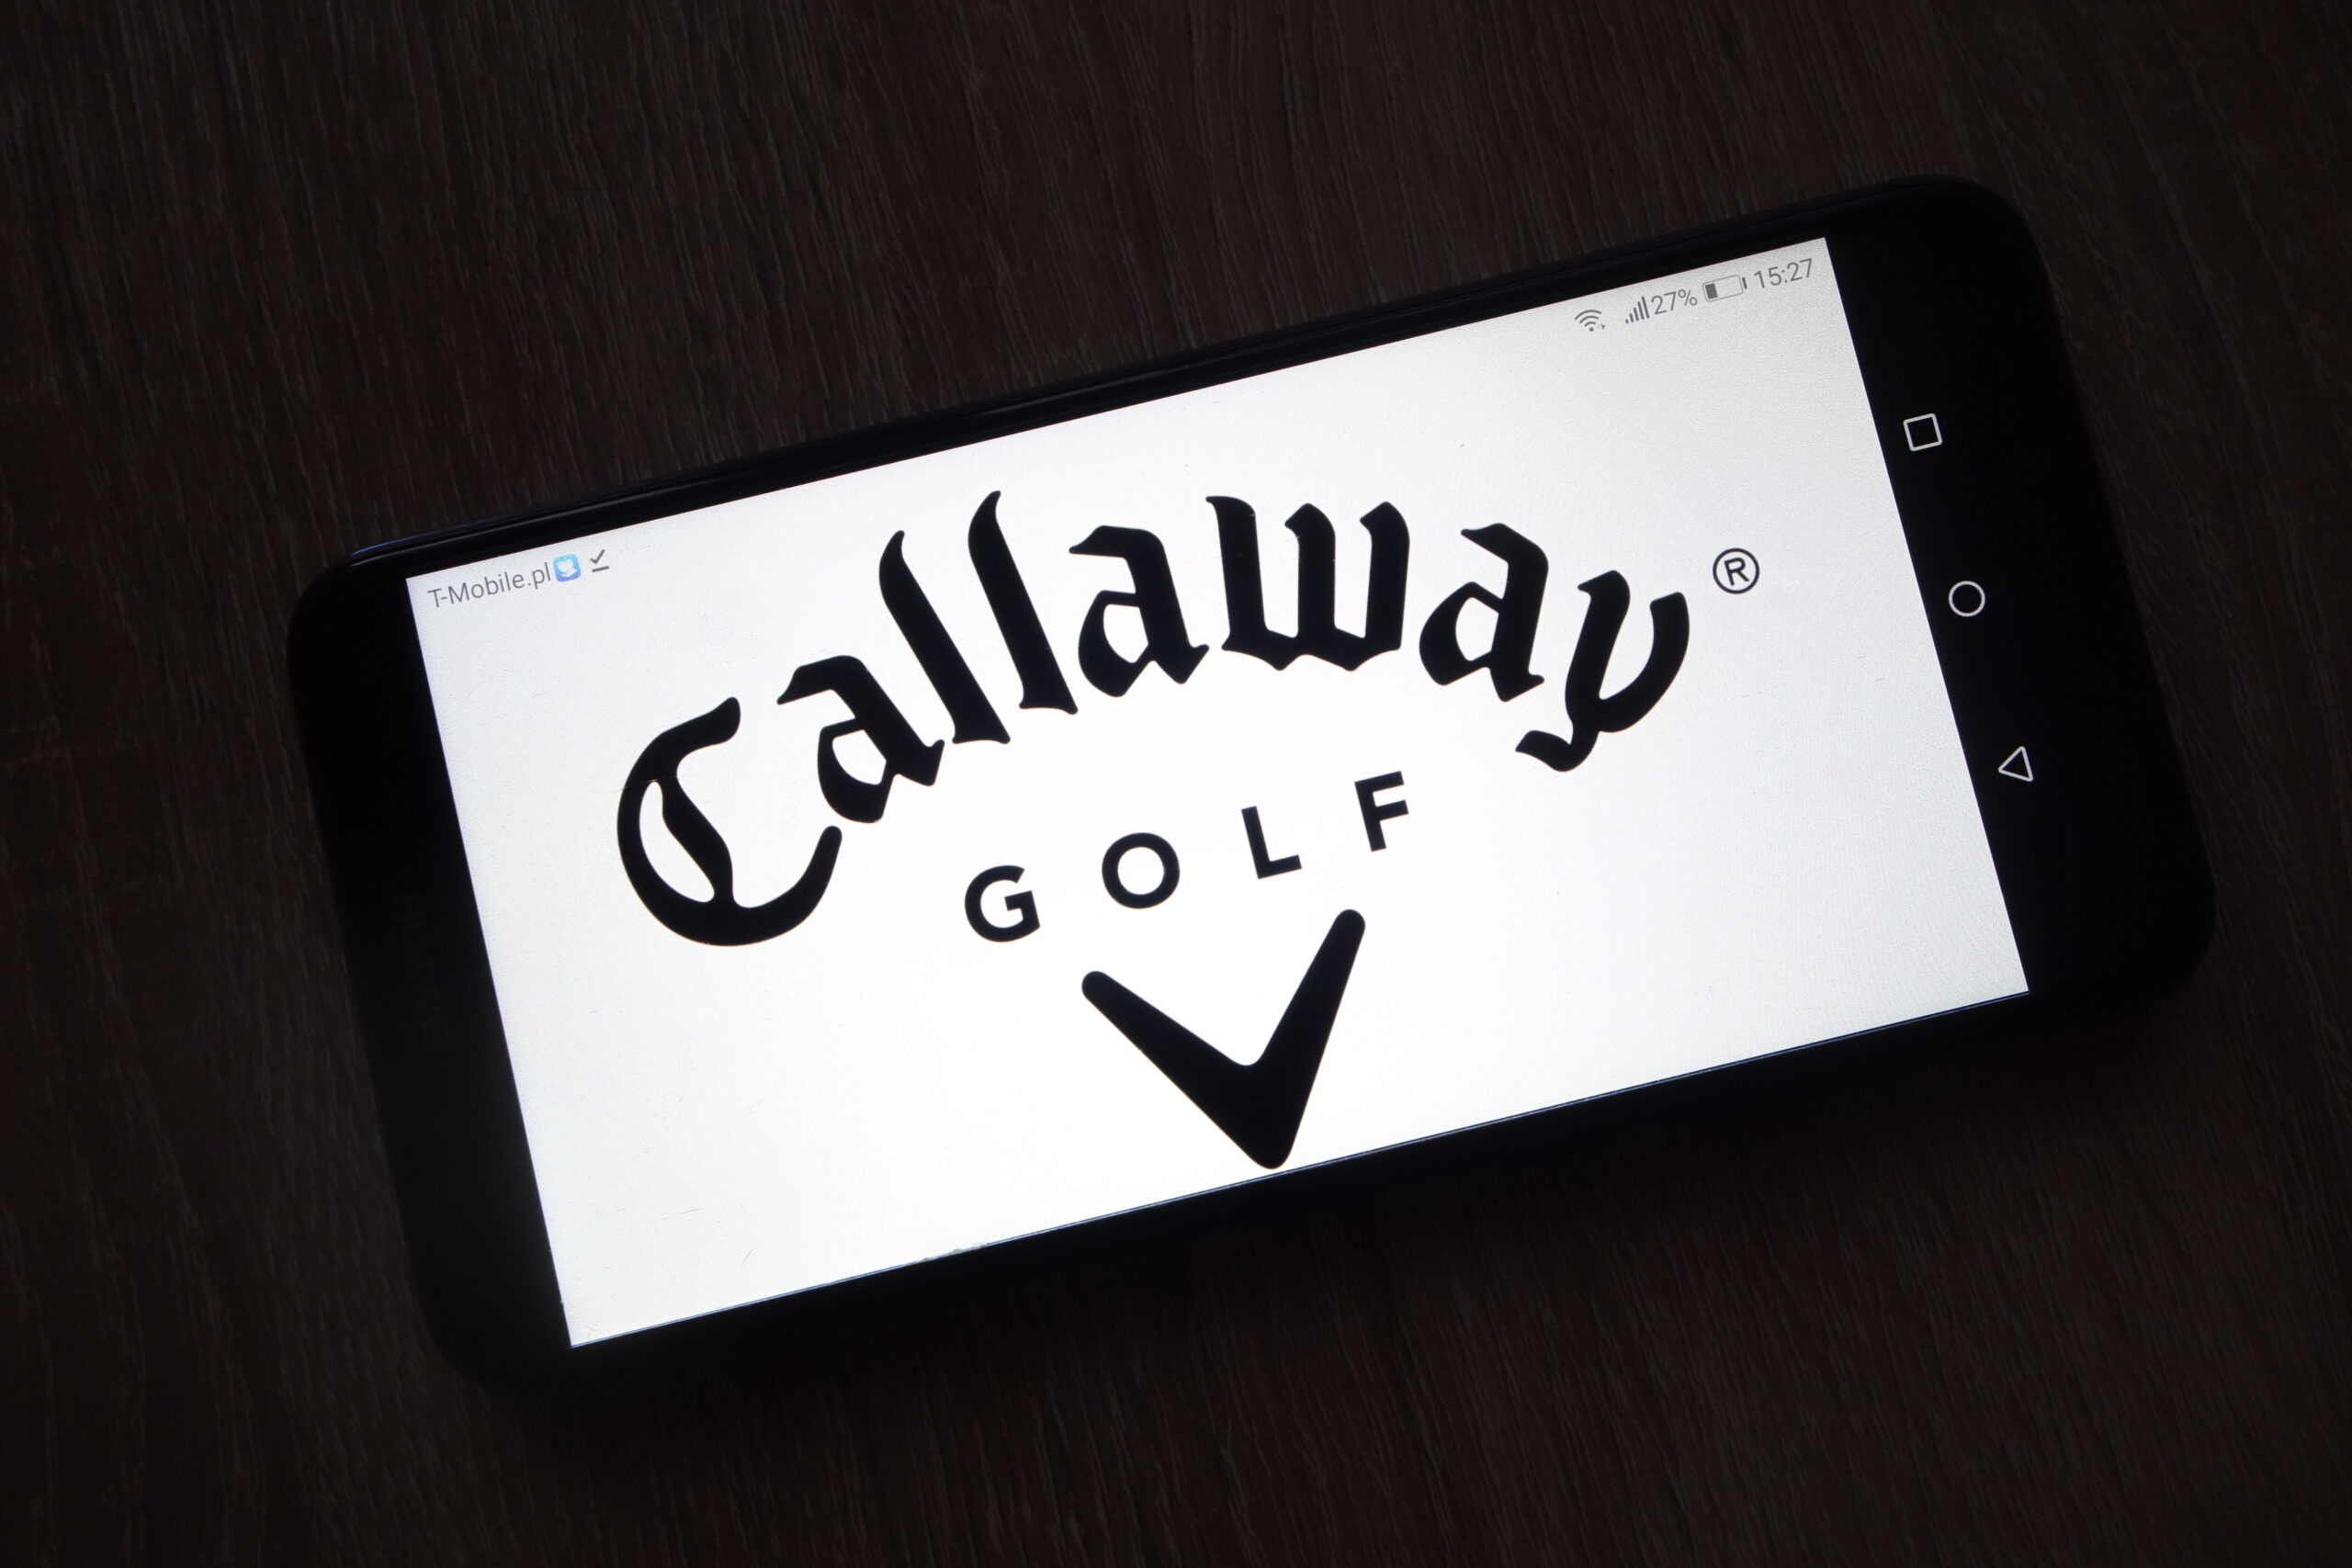 Callaway's logo featured on smartphone amid massive data breach.